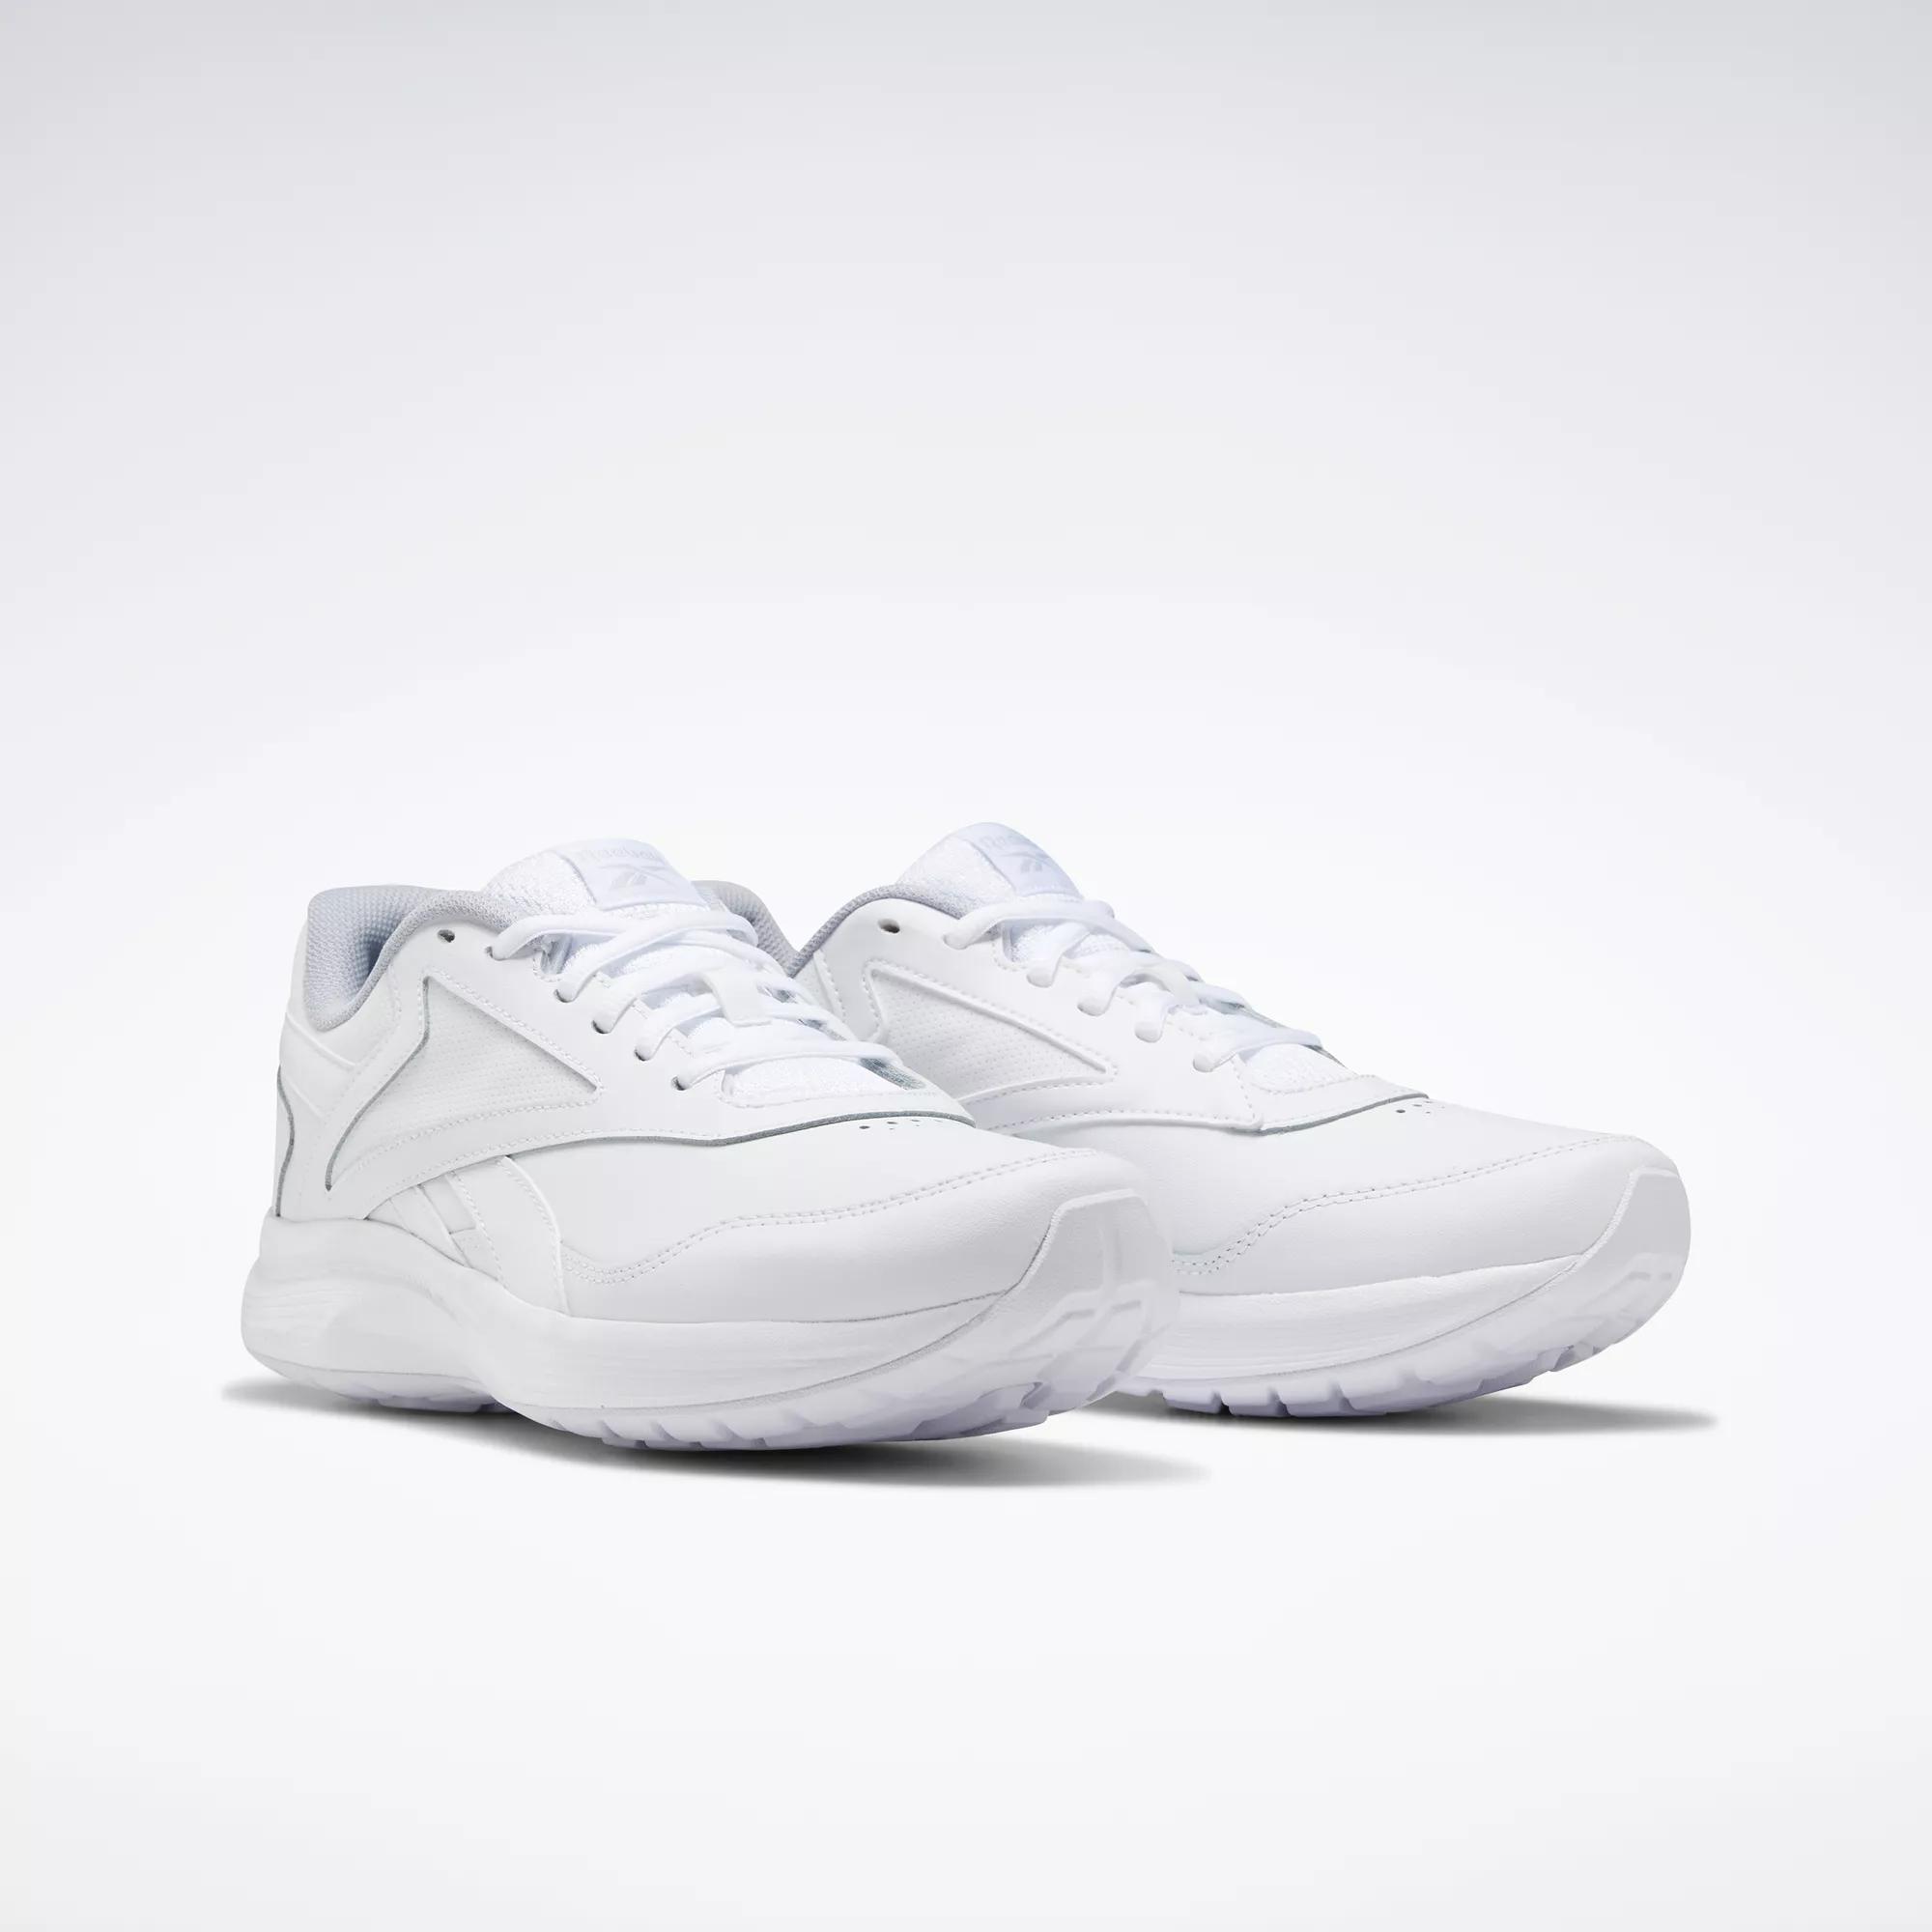 Vertrouwen op silhouet moreel Walk Ultra 7 DMX MAX Wide Men's Shoes - White / Cold Grey 2 / Collegiate  Royal | Reebok